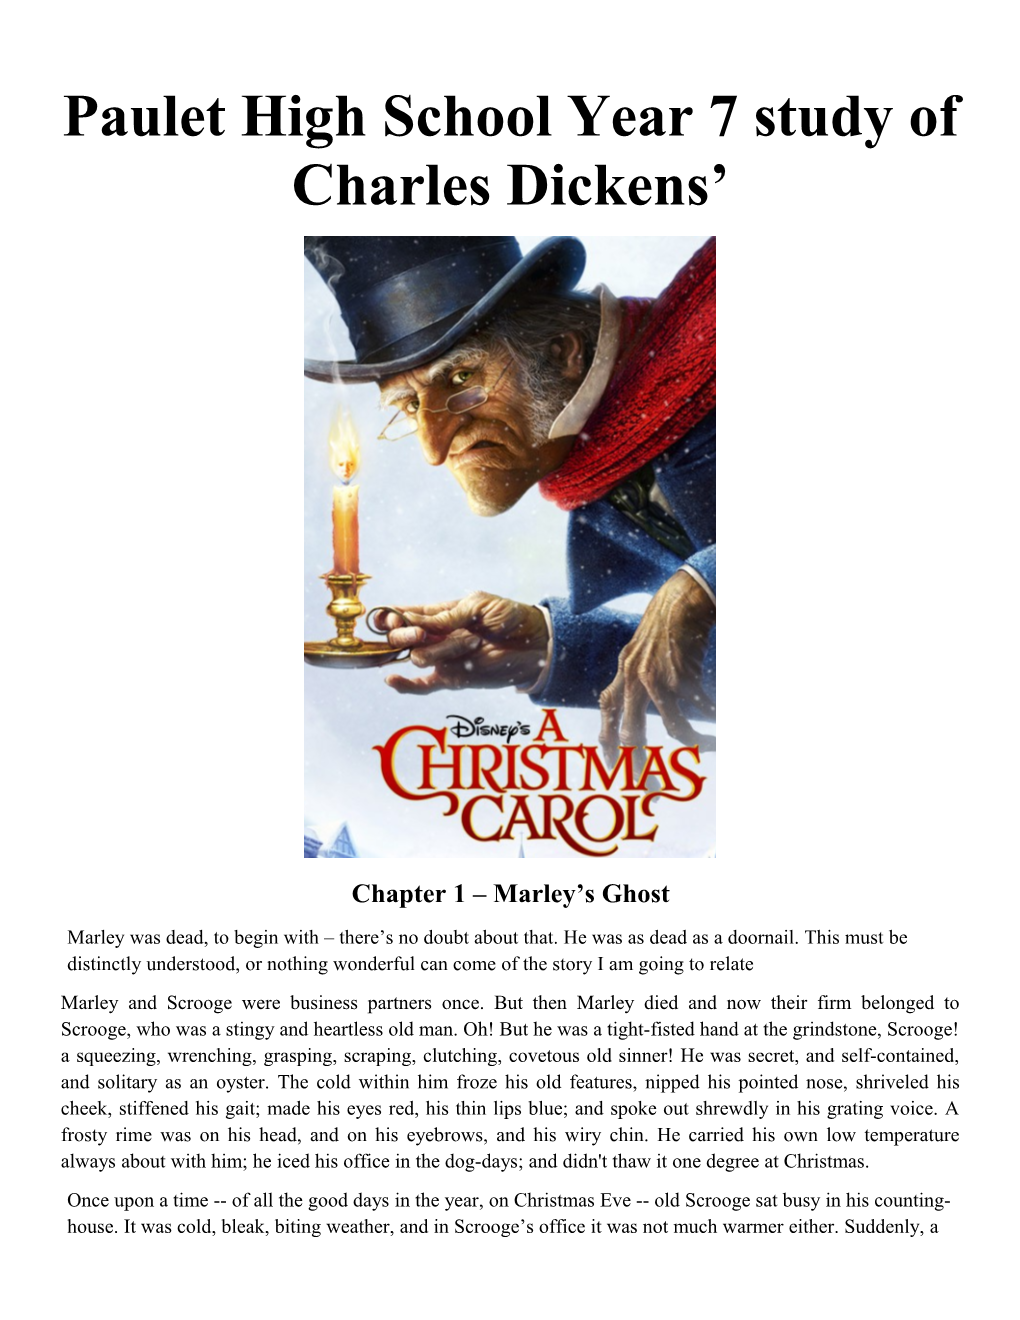 Paulet High School Year 7 Study of Charles Dickens